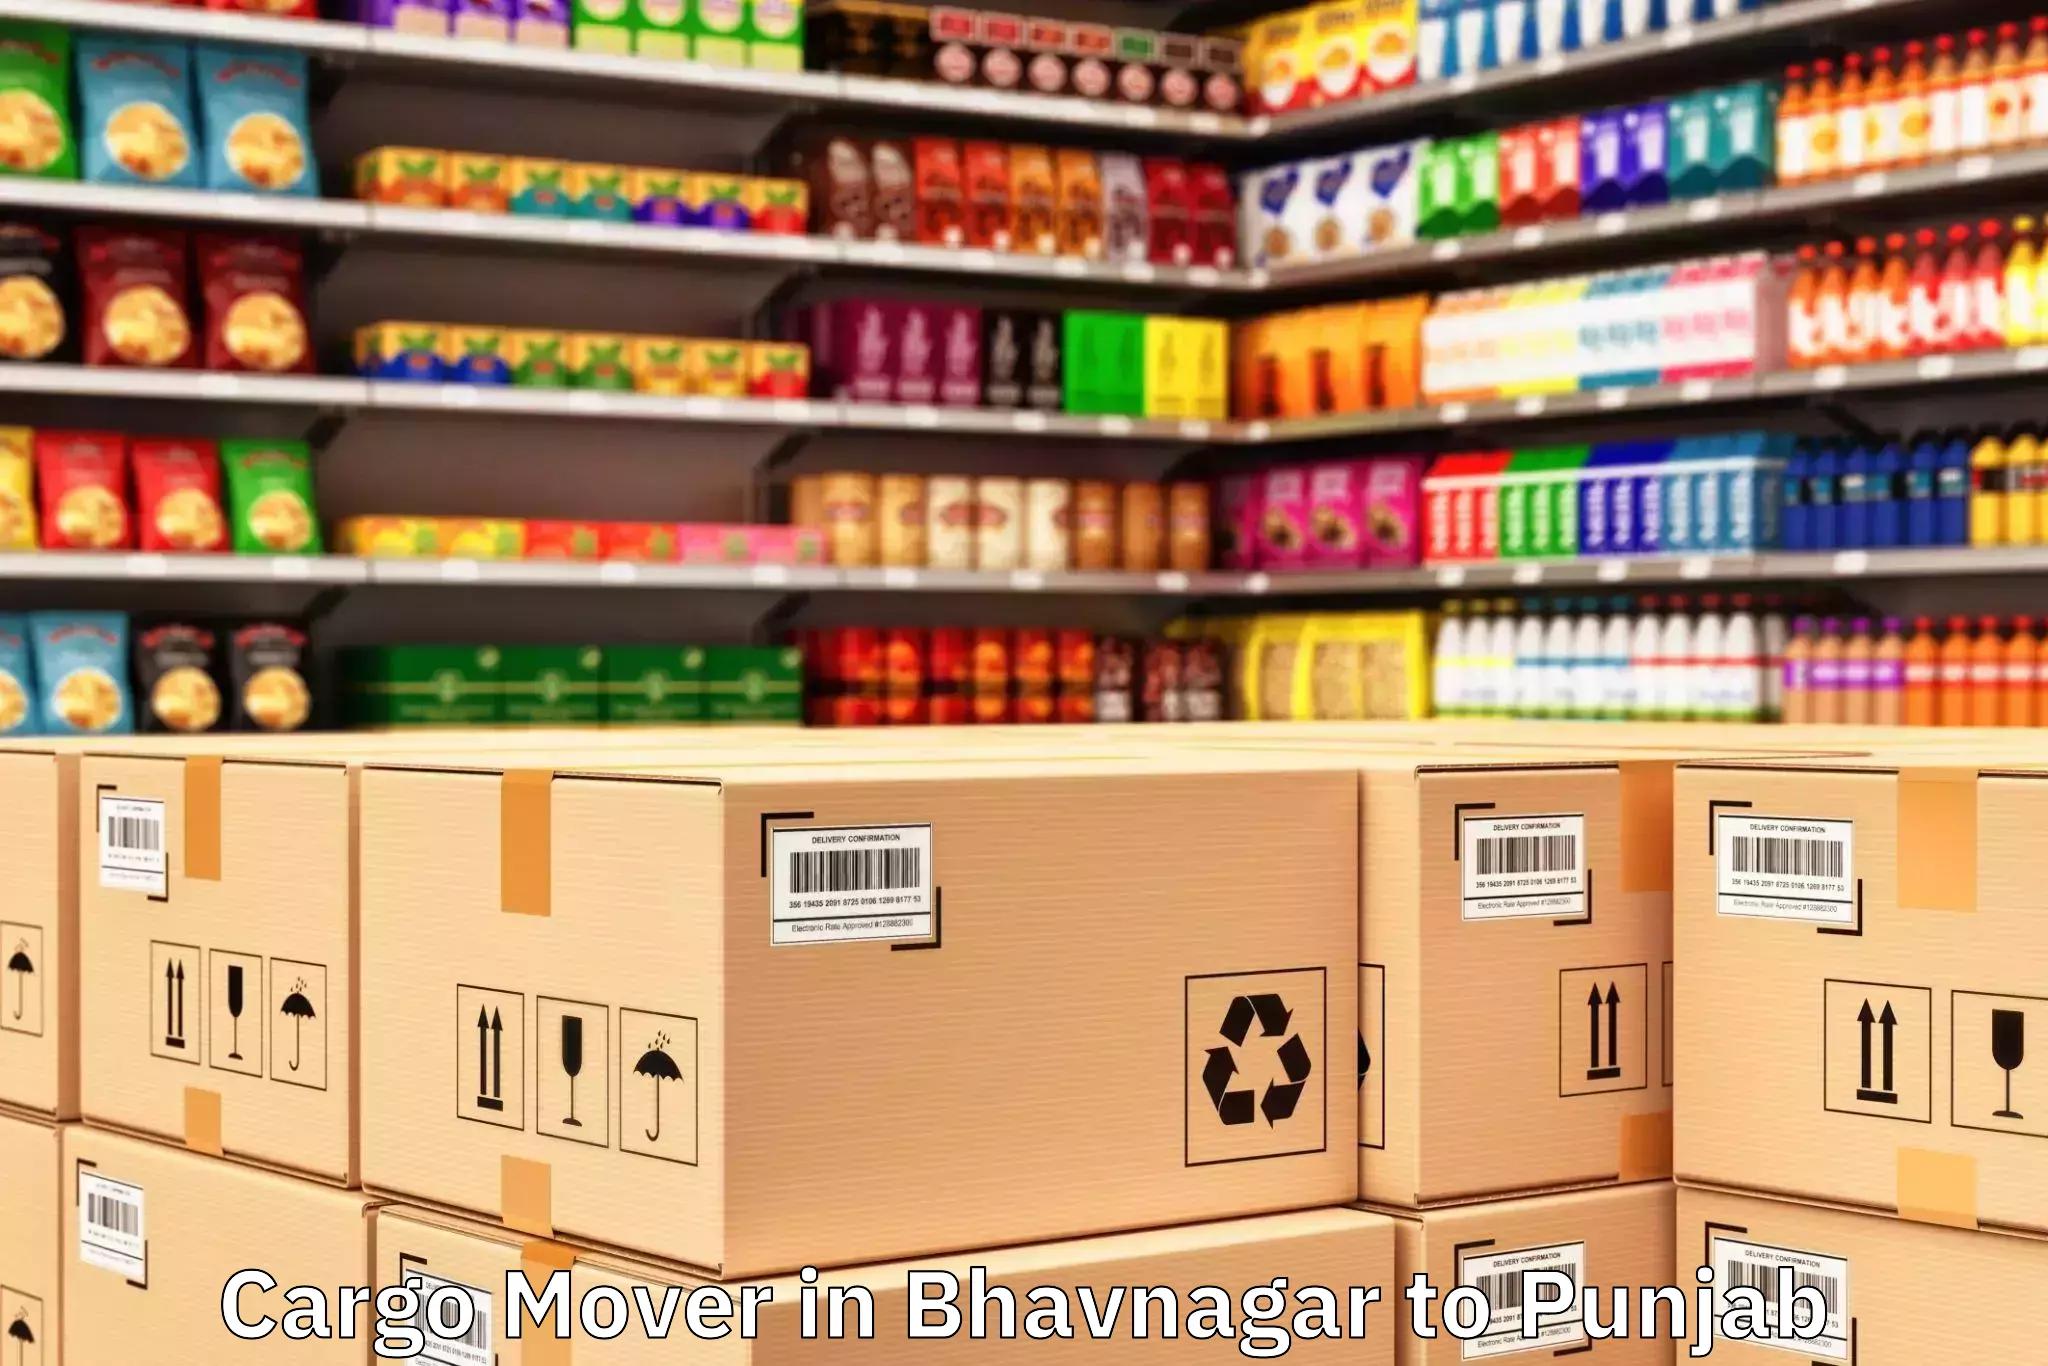 Easy Bhavnagar to Punjab Cargo Mover Booking